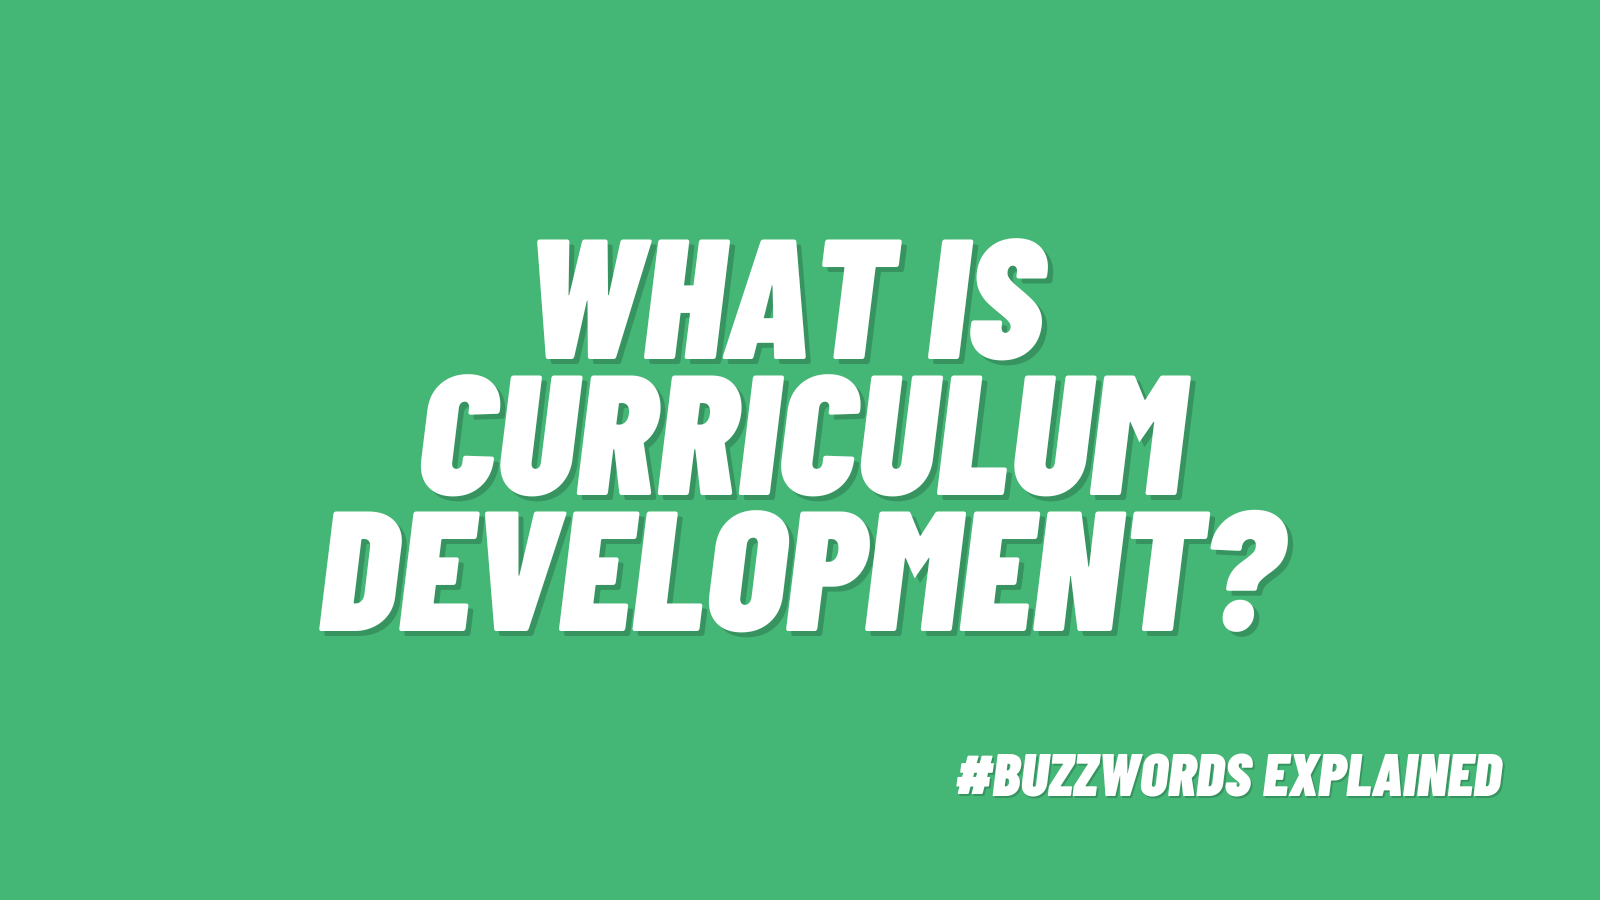 What is Curriculum Development? #buzzwordsexplained